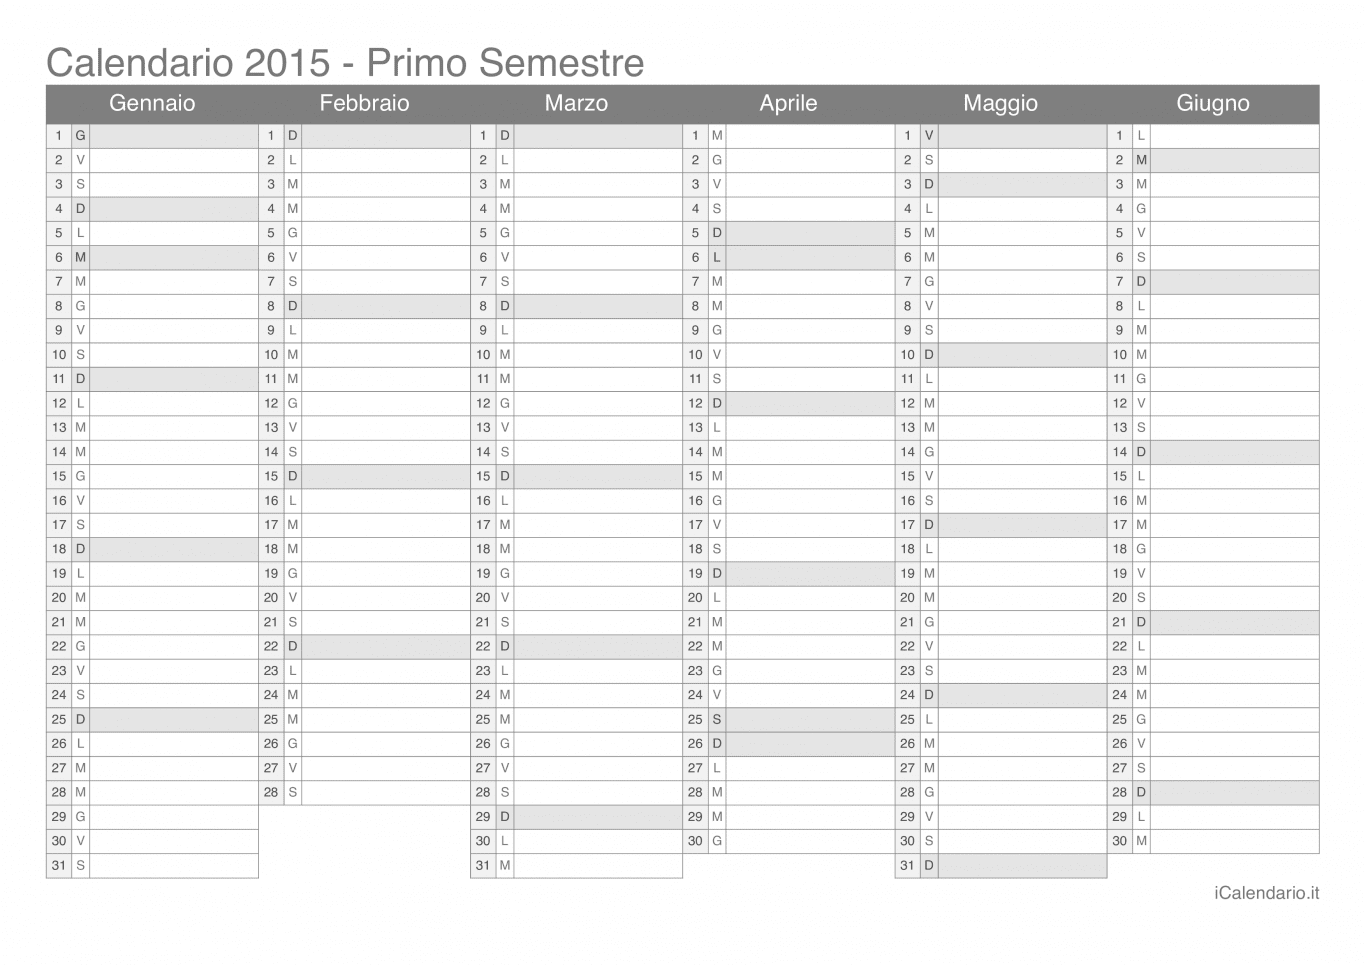 Calendario semestrale 2015